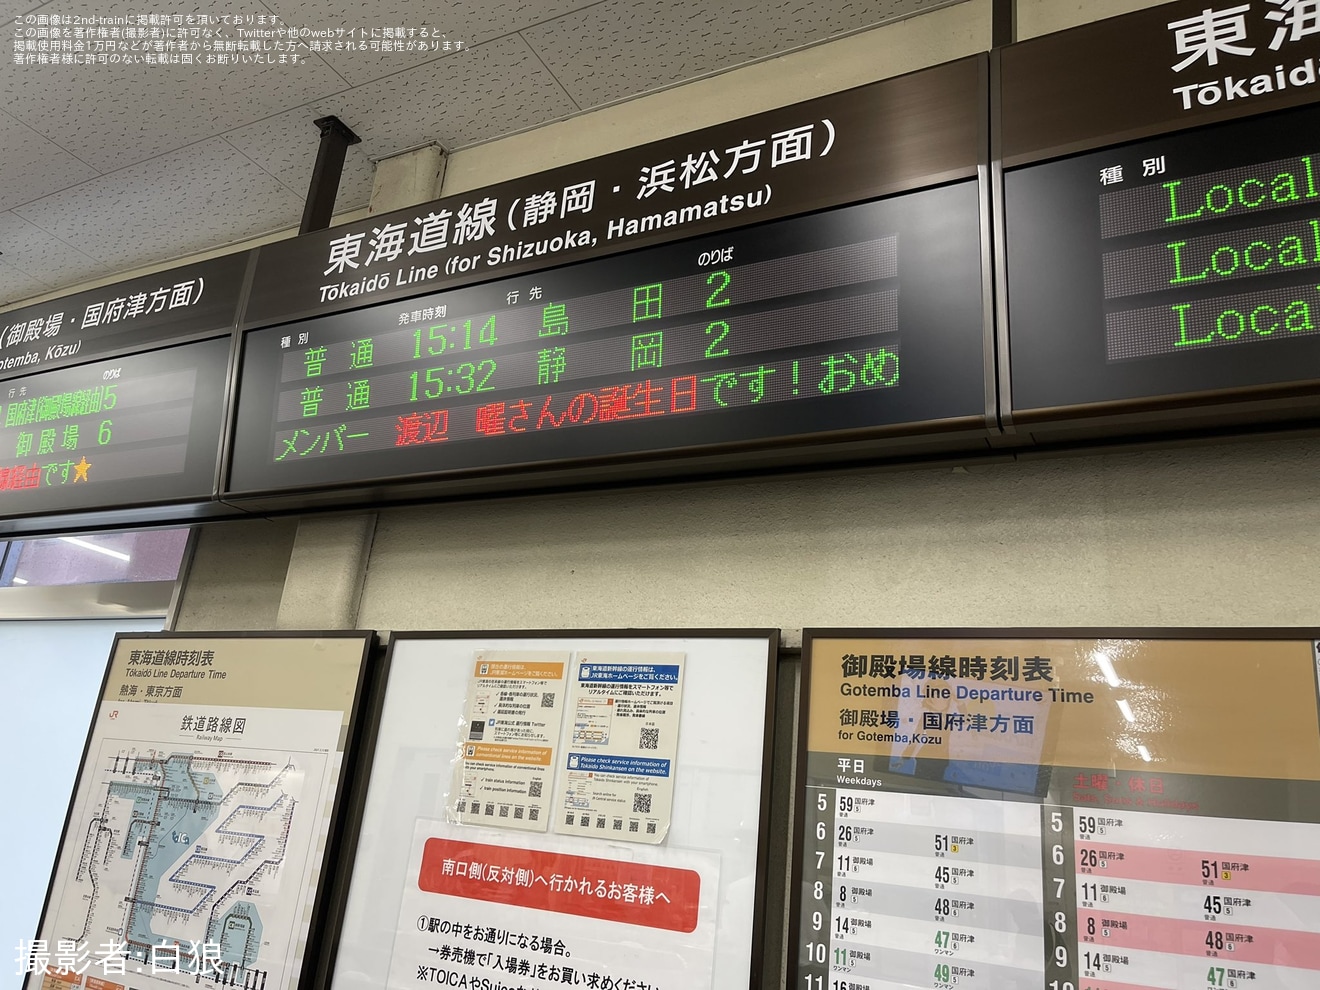 【JR海】沼津駅が「ラブライブ!サンシャイン!!」の「渡辺曜」誕生日仕様にの拡大写真